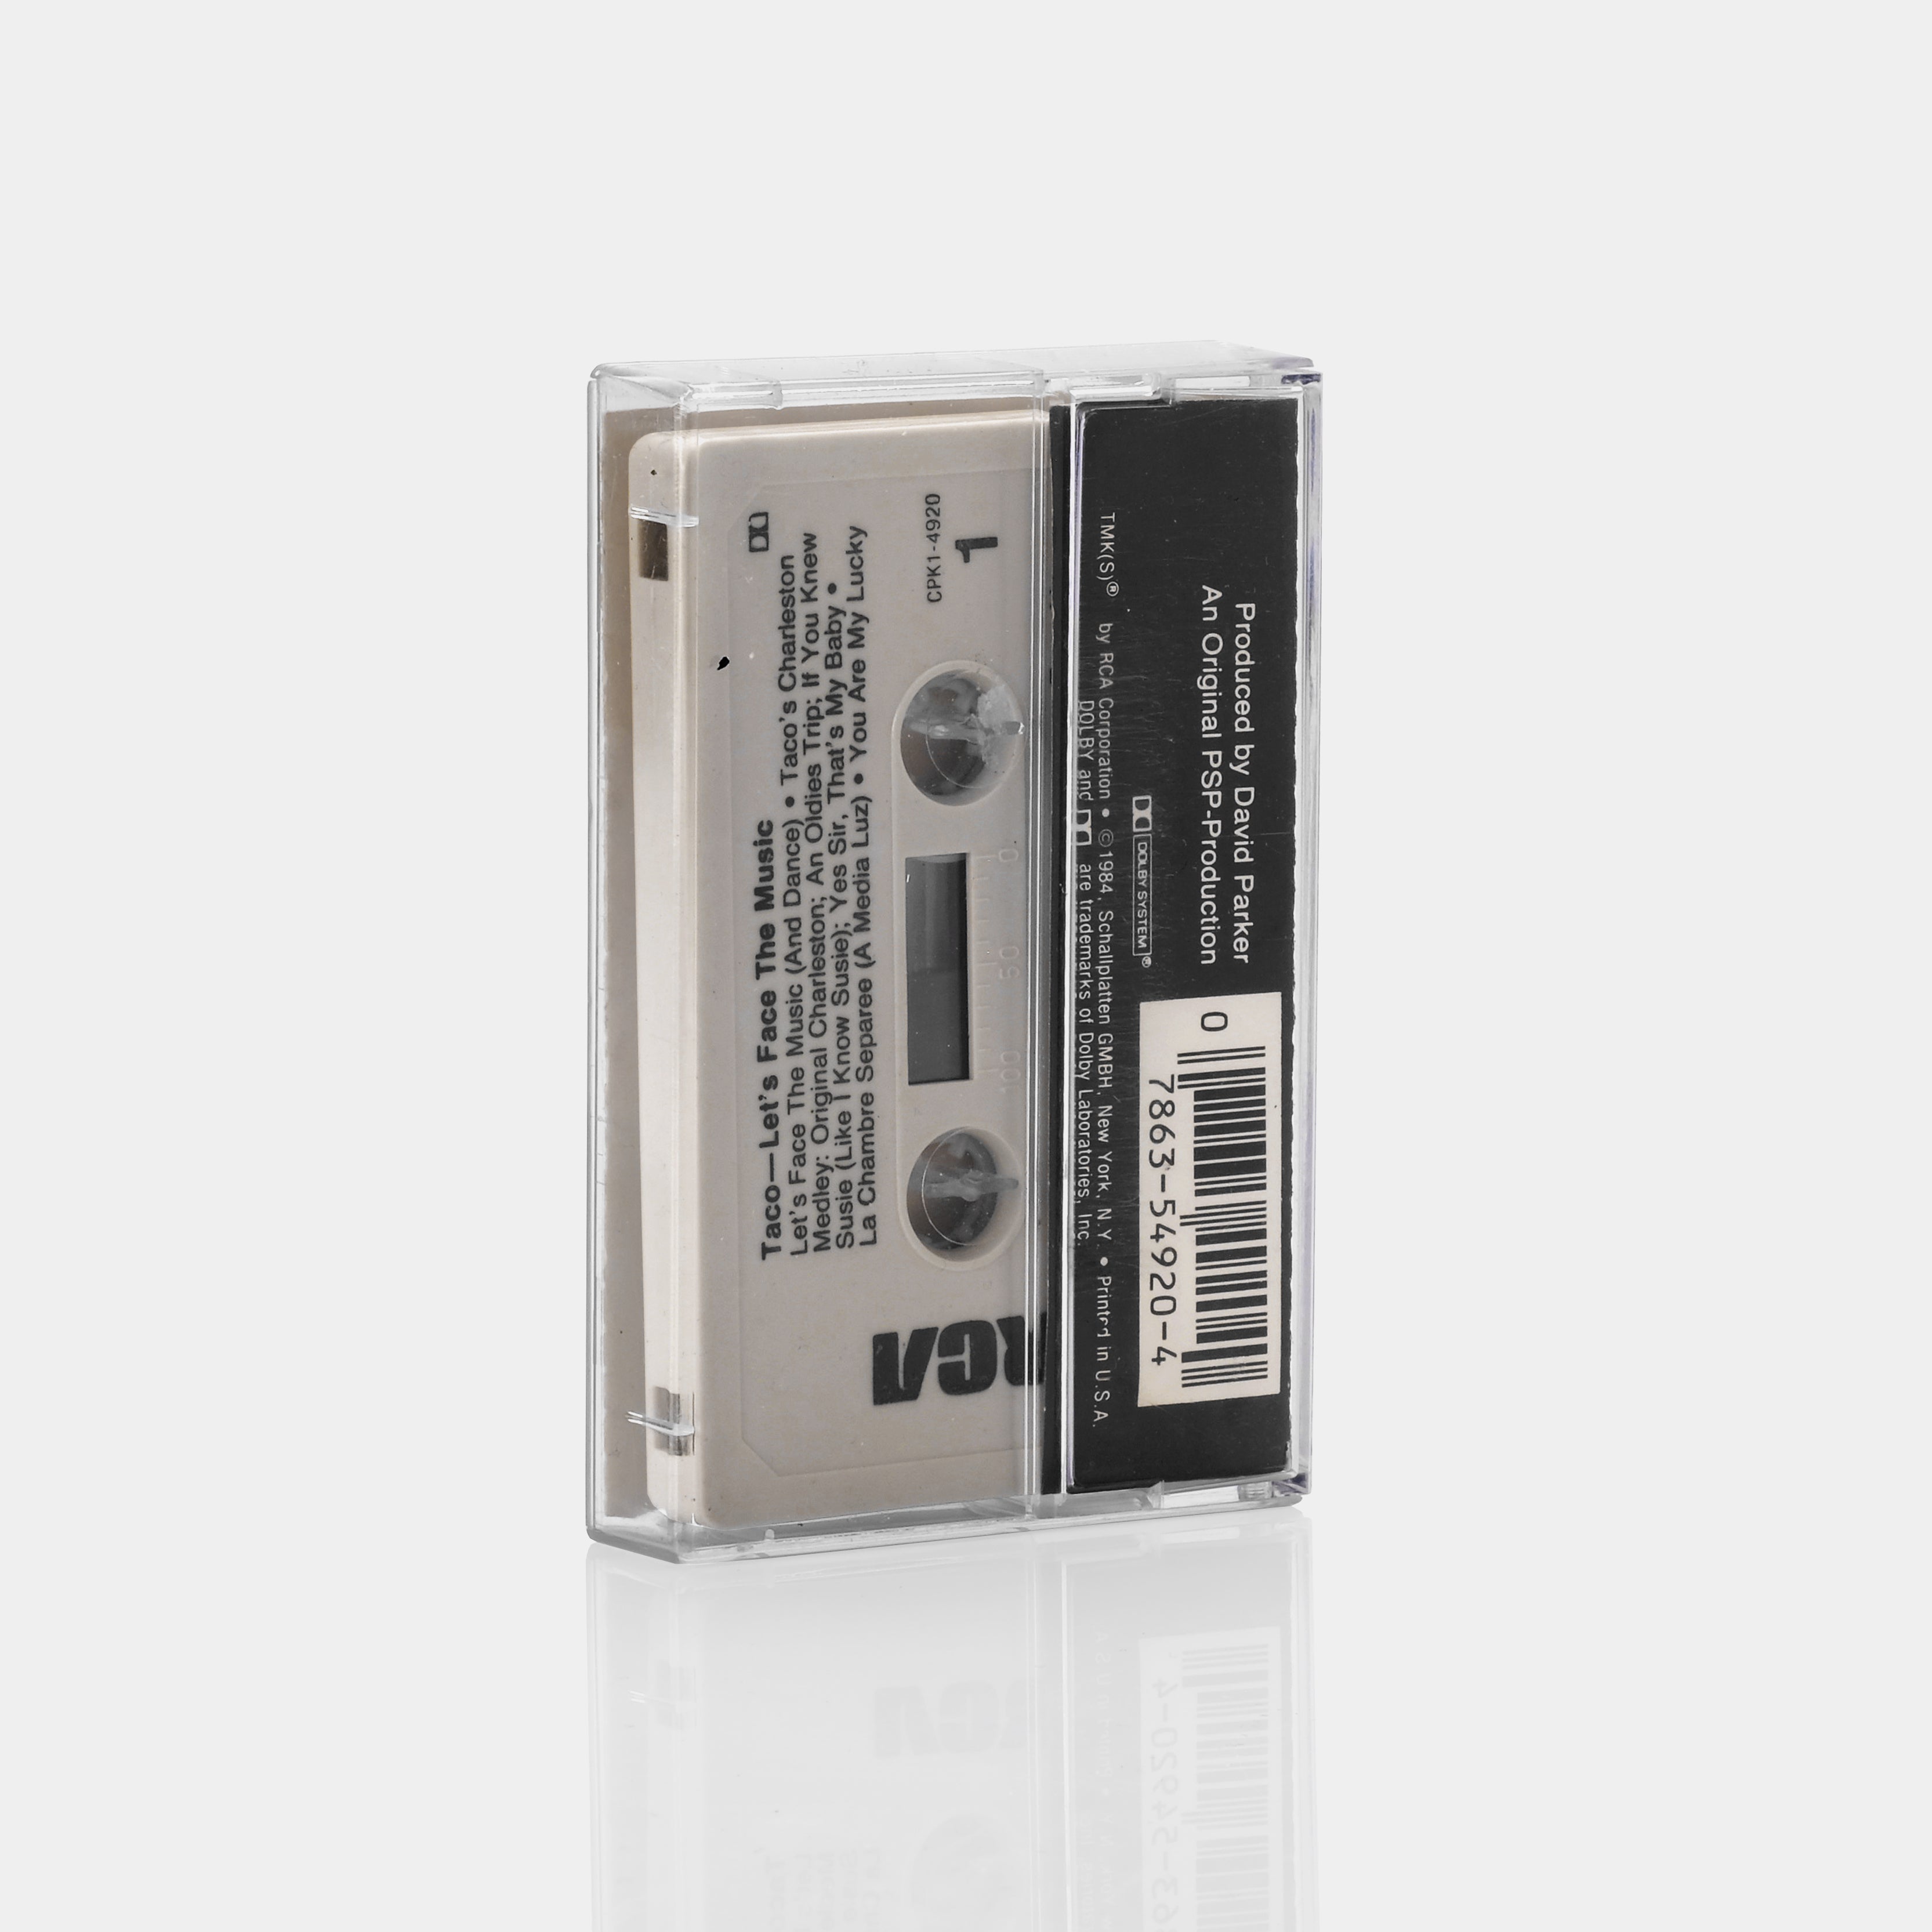 Taco - Let's Face The Music Cassette Tape